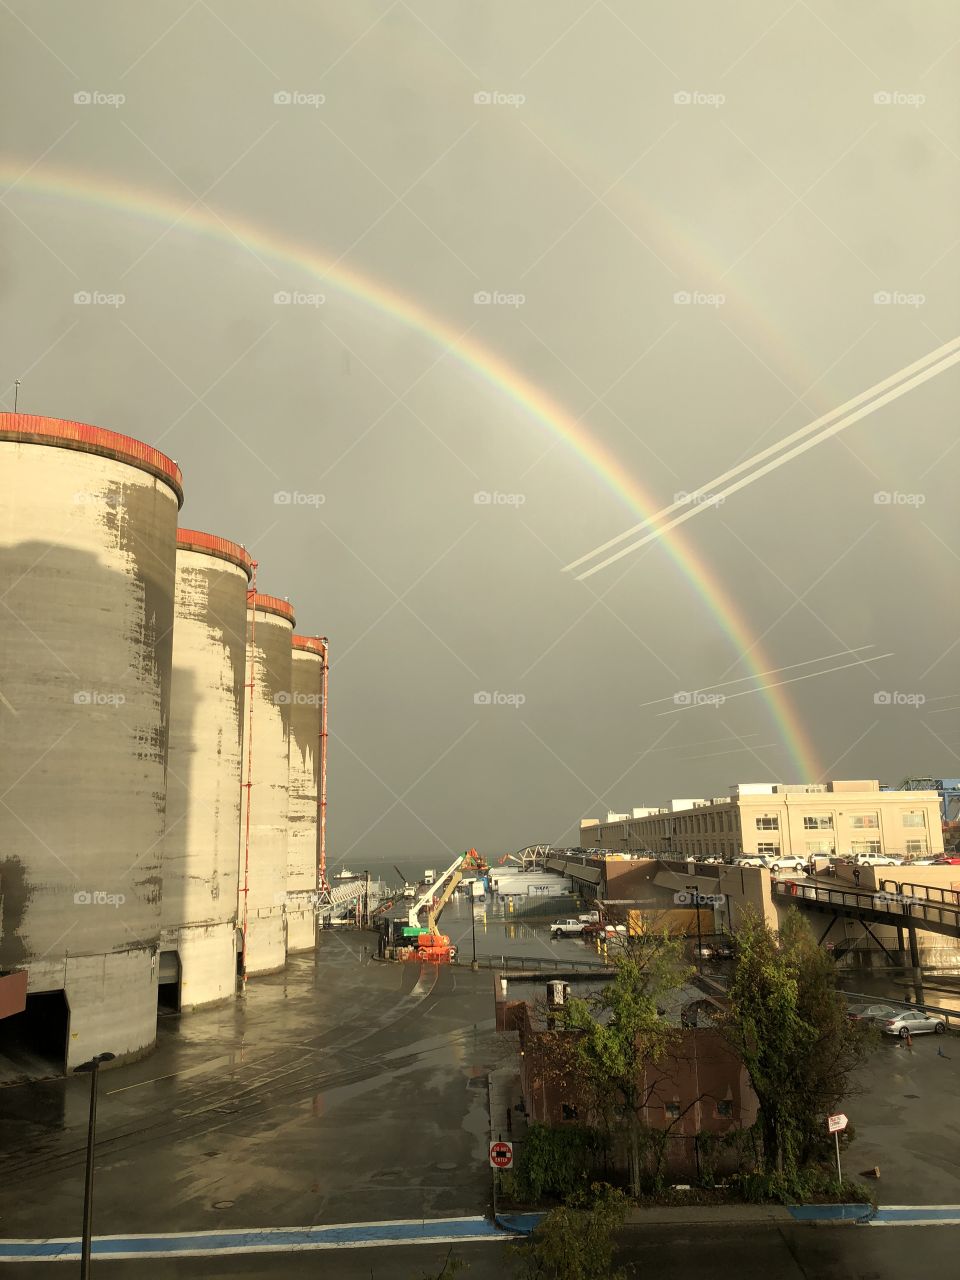 Seaport double rainbow - Boston